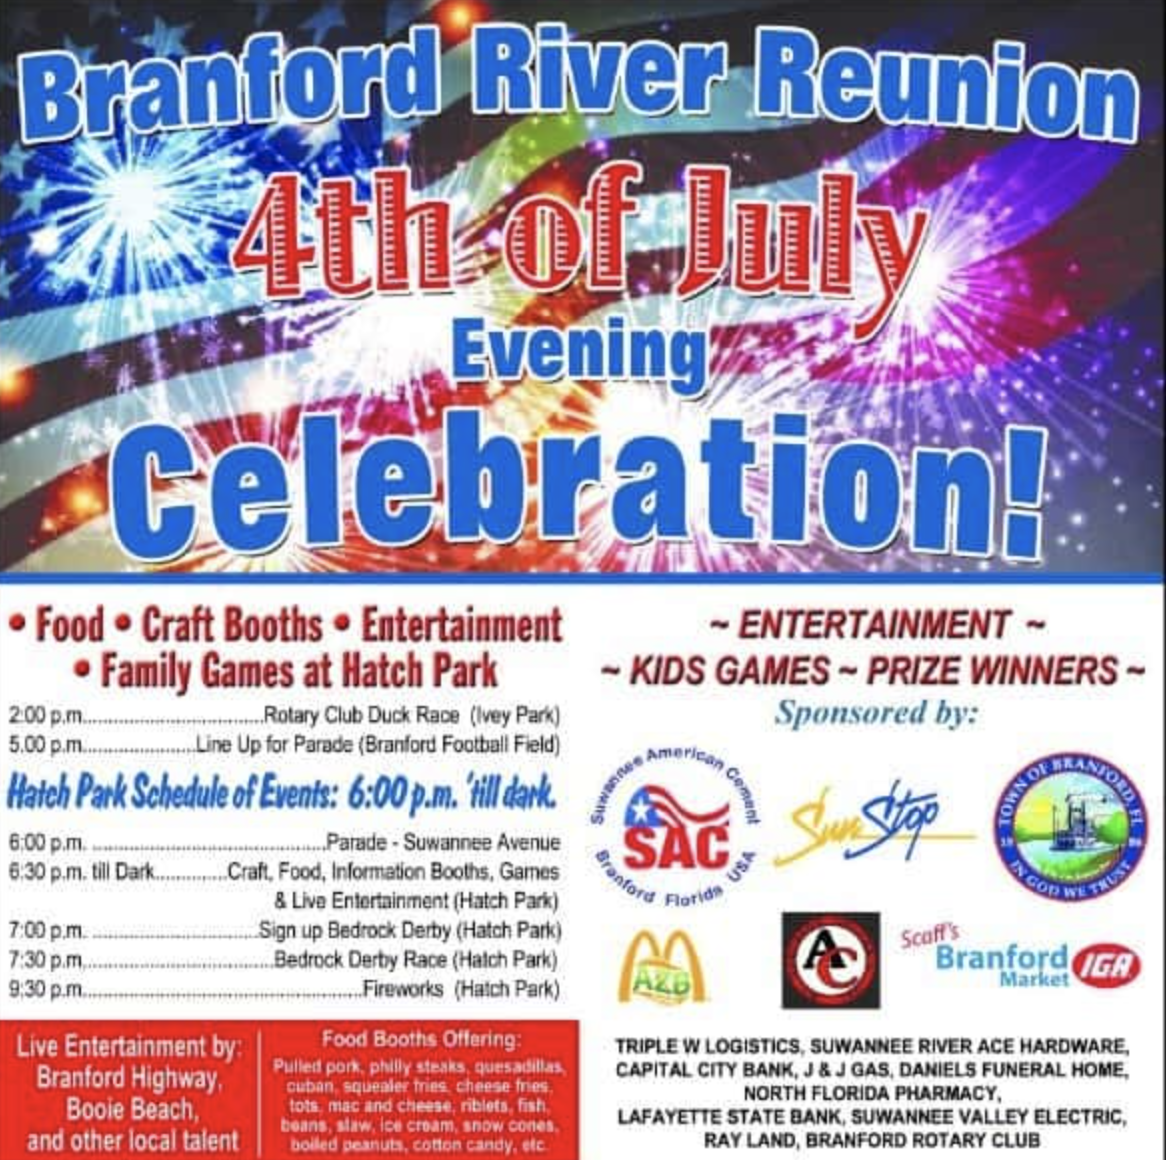 Branford River Reunion Festival